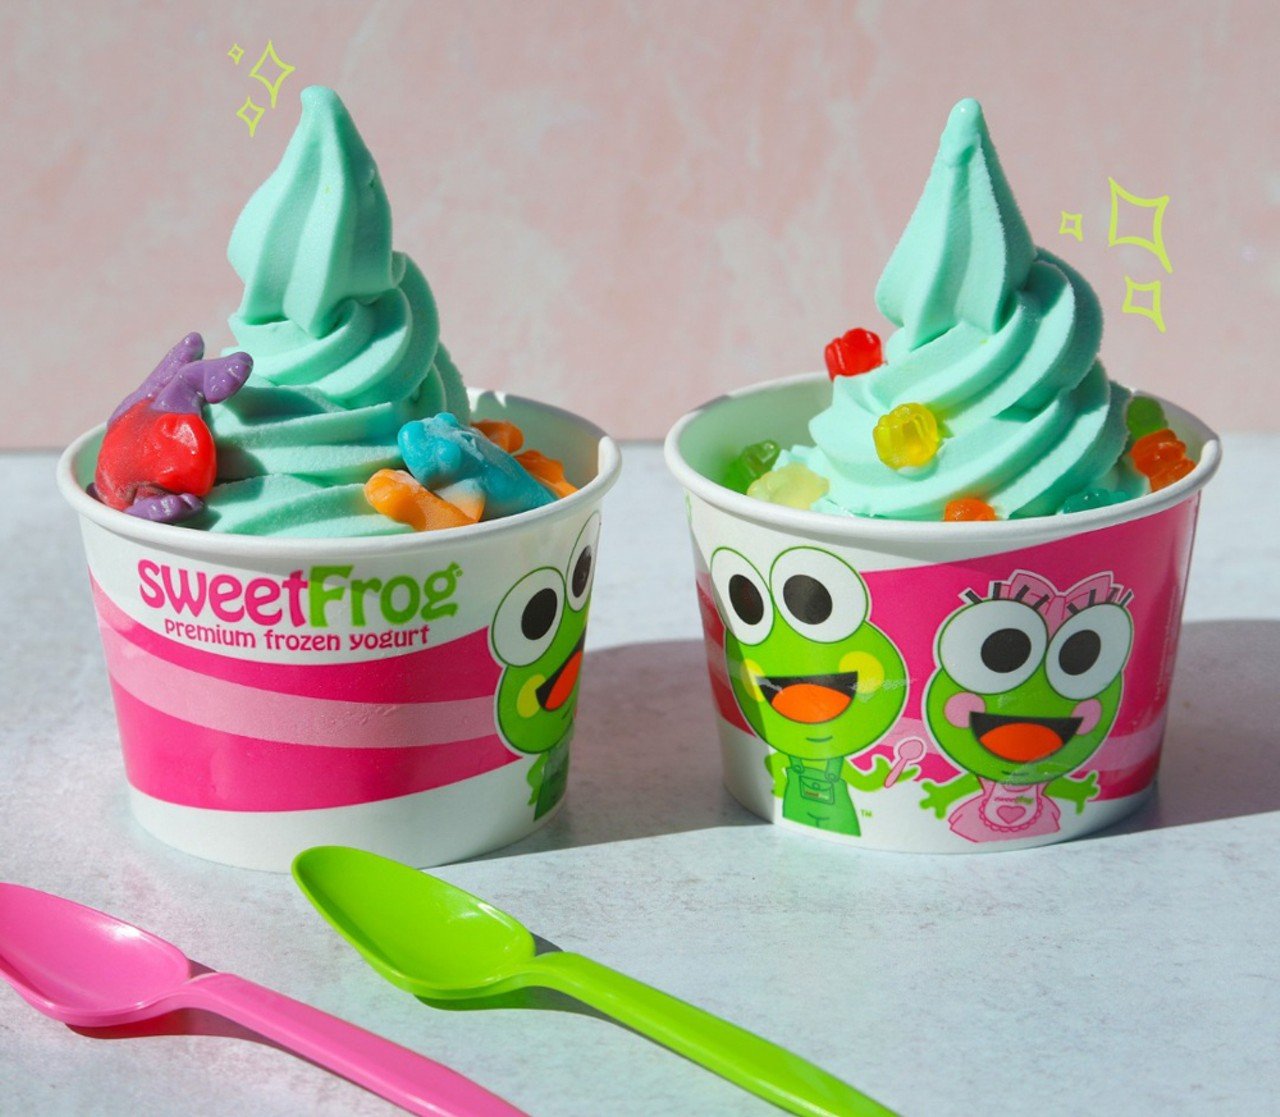  sweetFrog Premium Frozen Yogurt 
Nearest location to Louisville: Cincinnati
Frozen yogurt! Little chibi frog mascots! Pink and green everywhere! It&#146;s all just so cute!
Photo via facebook.com/sweetfrogfroyo